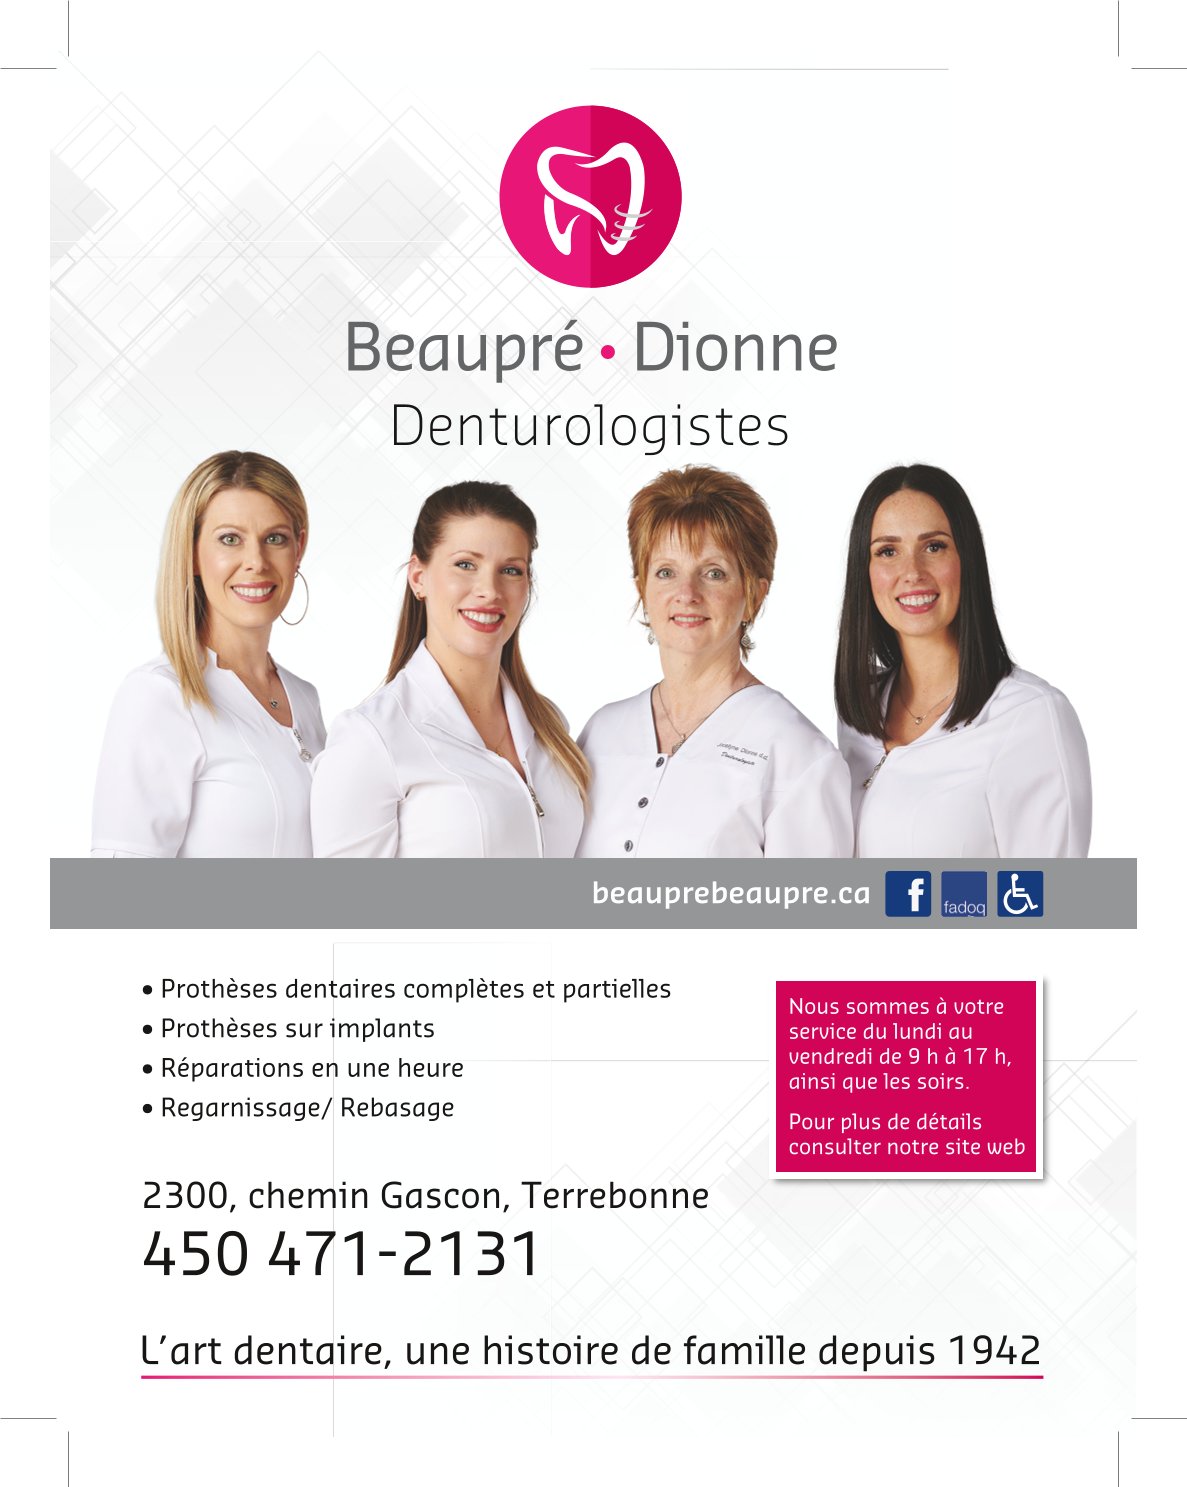 Denturologiste Beaupré - Dionne